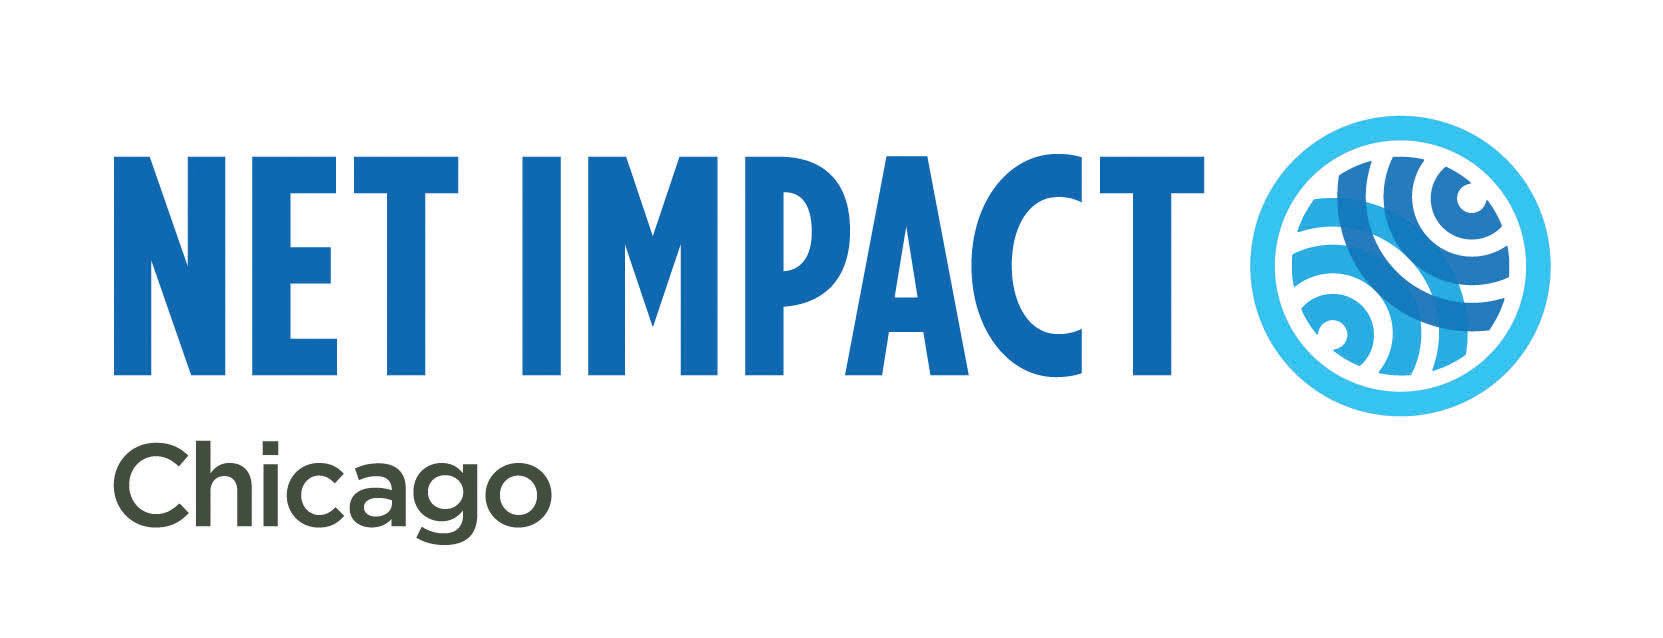 Net Impact Chicago with round logo